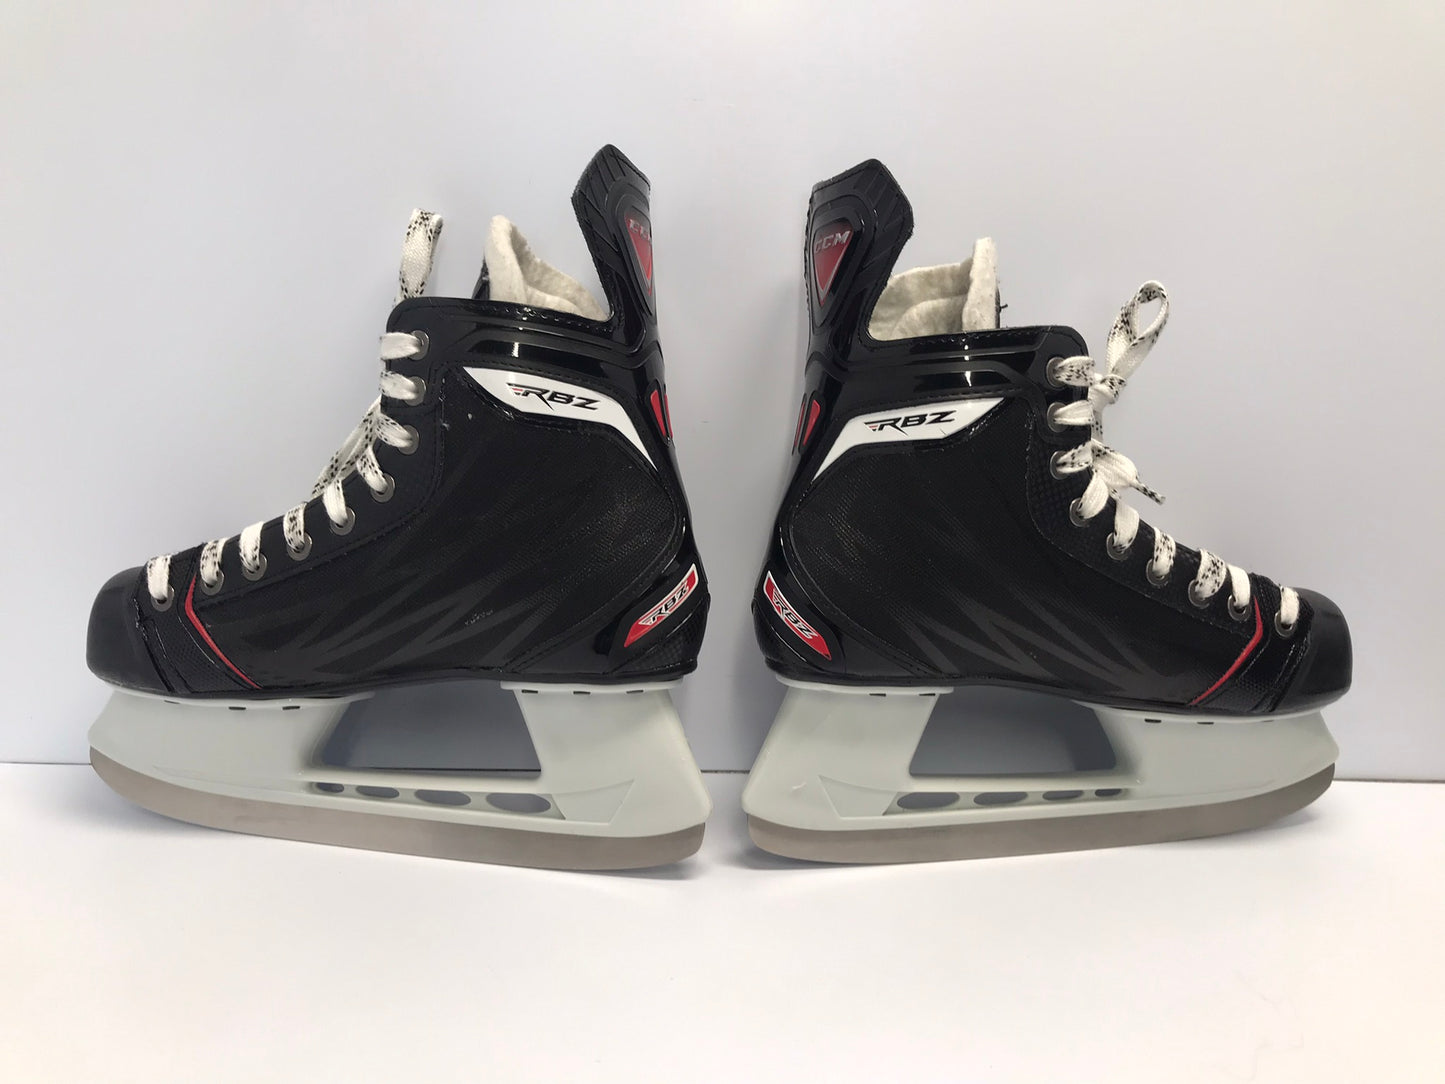 Hockey Skates Men's Size 7 Shoe 5.5 Skate Size CCM RBZ New